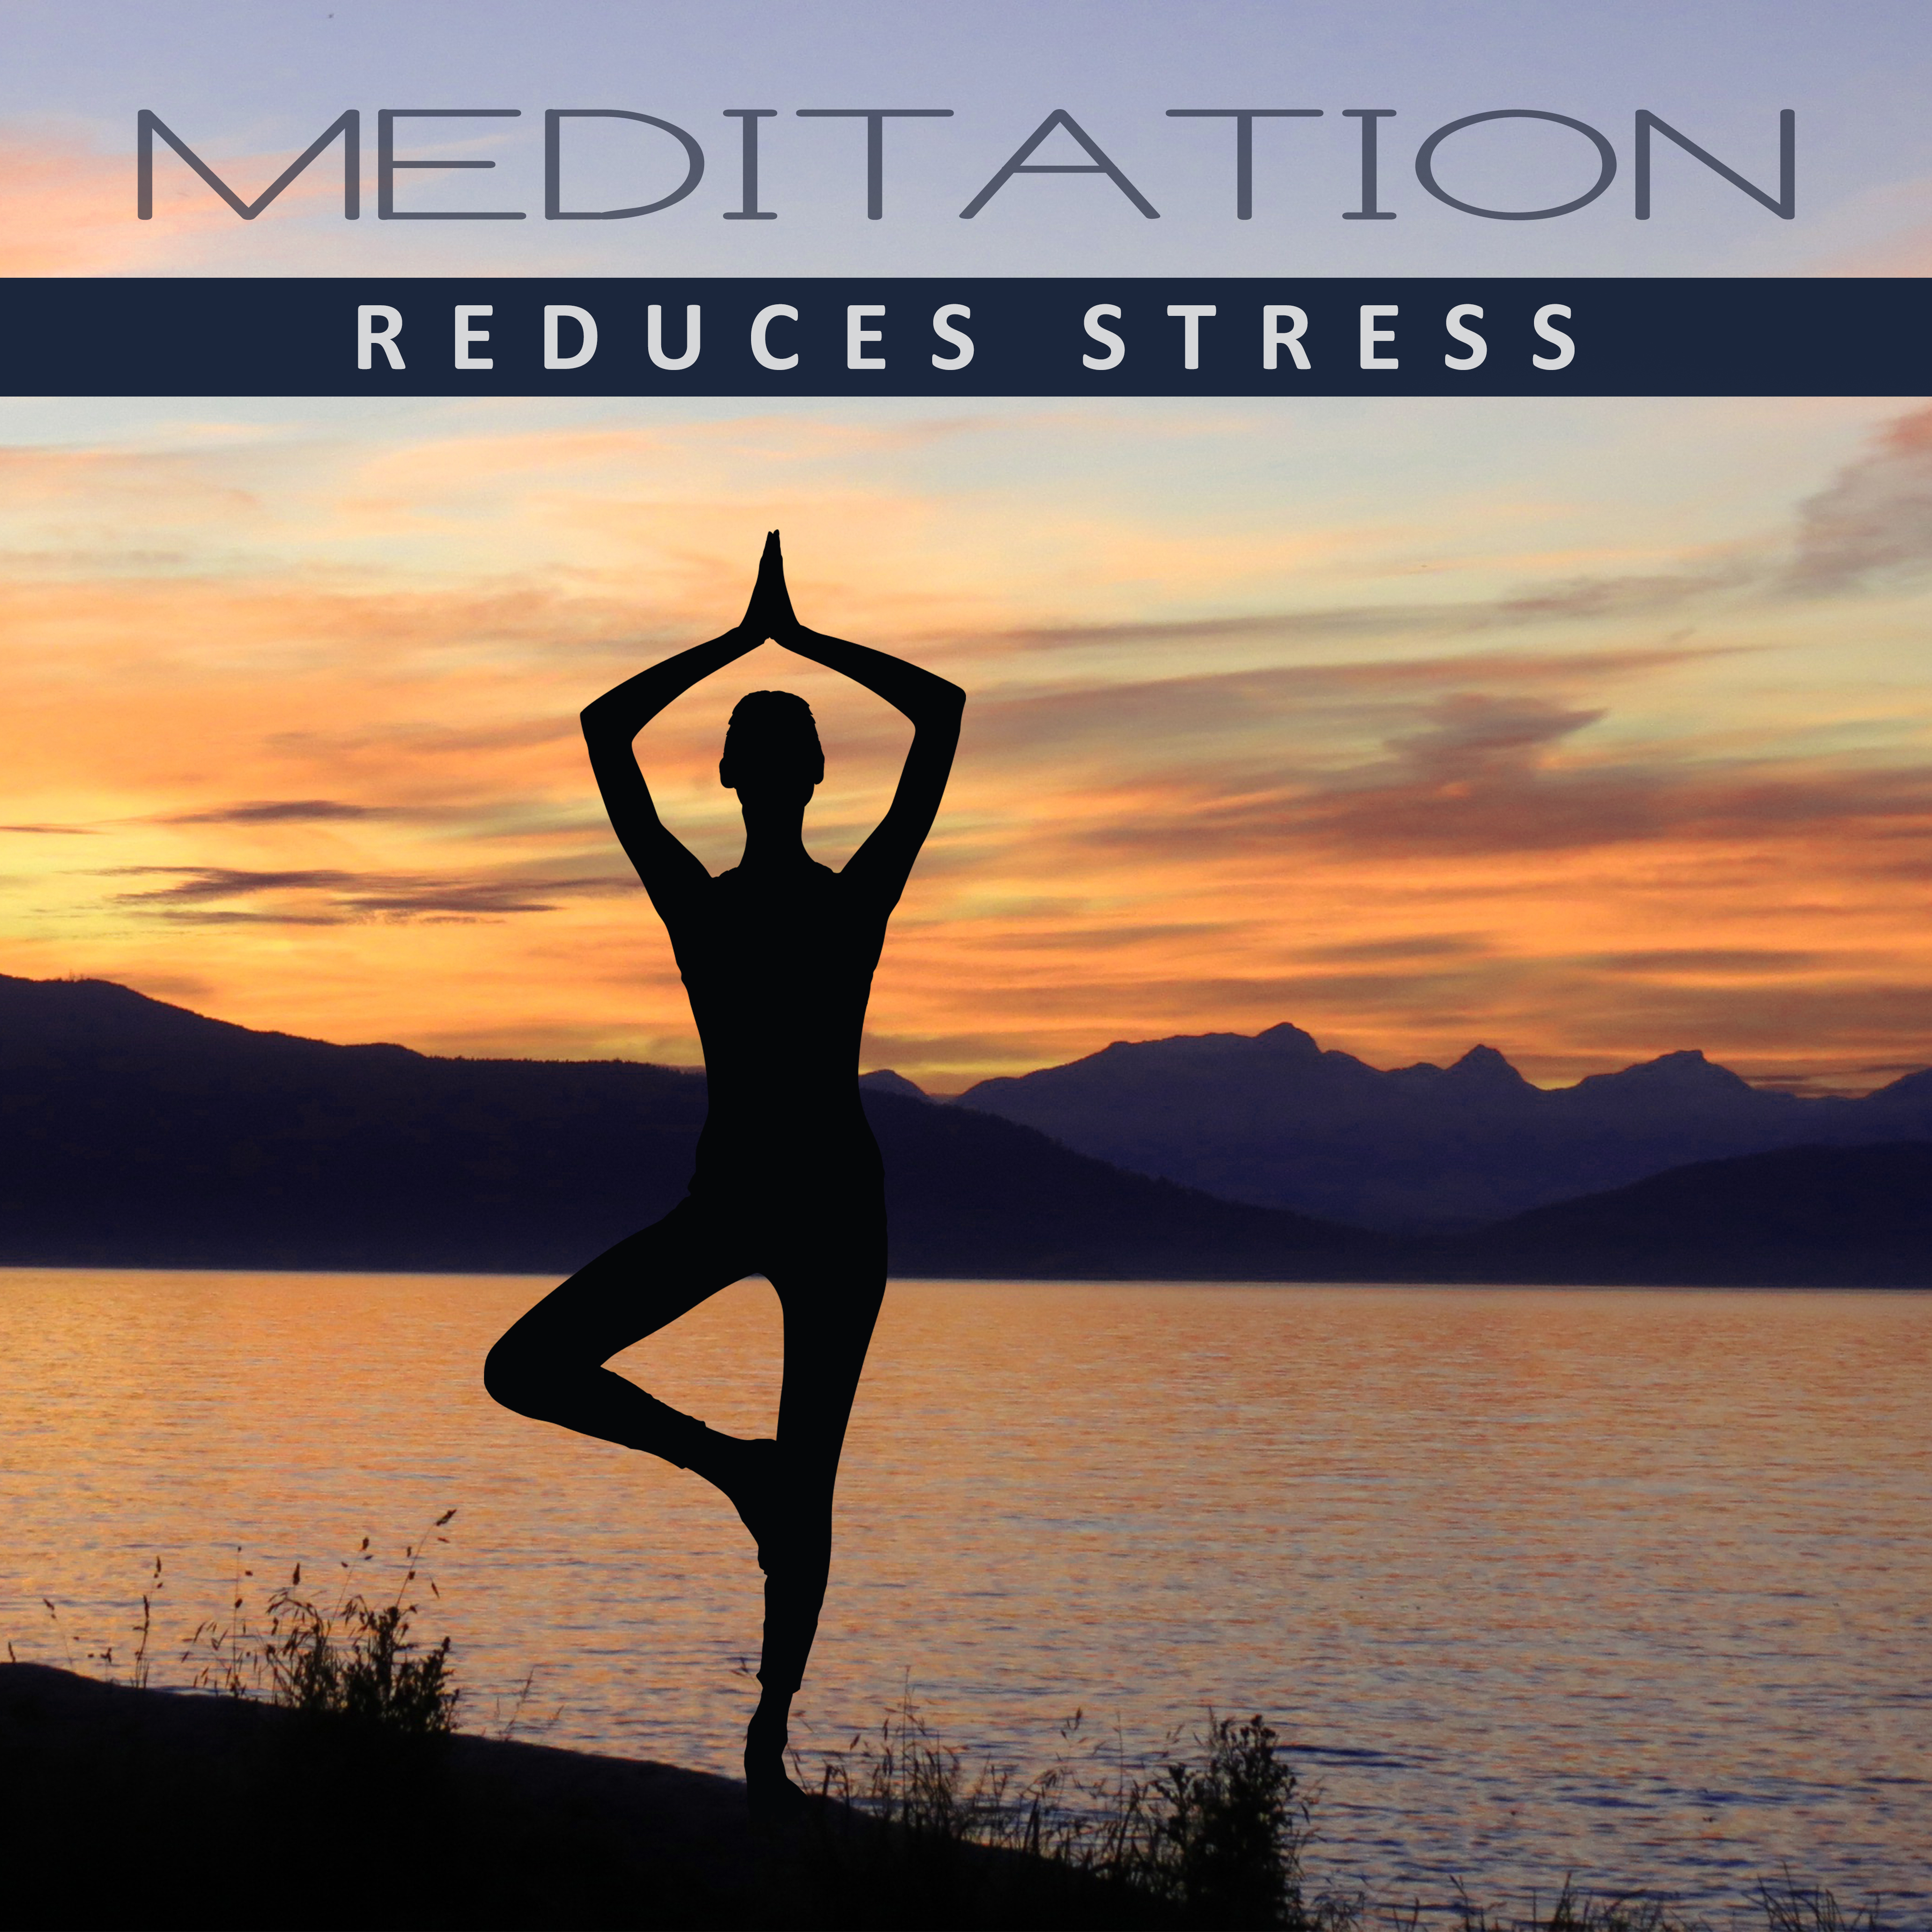 Meditation Reduces Stress  Training Yoga, Relax, Chakra Balancing, Yoga Poses, Meditate, Peaceful Music to Rest